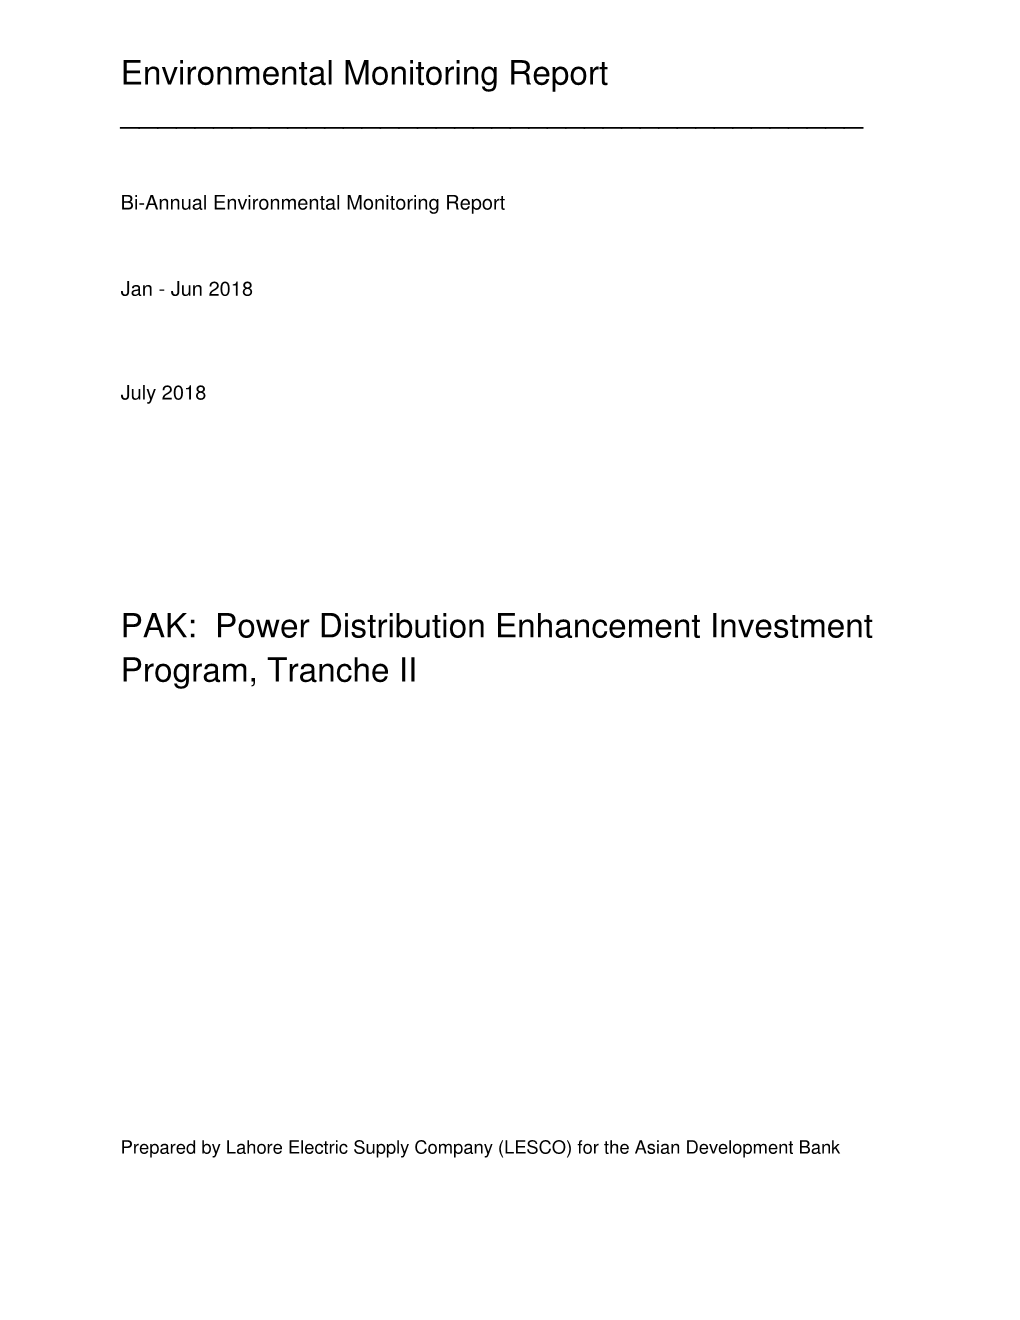 38456-033: Power Distribution Enhancement Investment Program